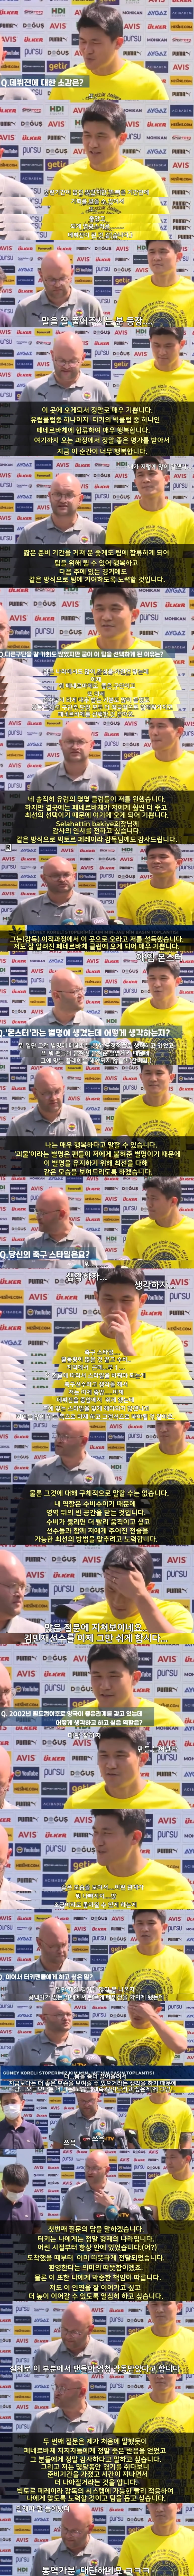 Local interpreter who translates beyond Kim Minjae's interview.jpg.